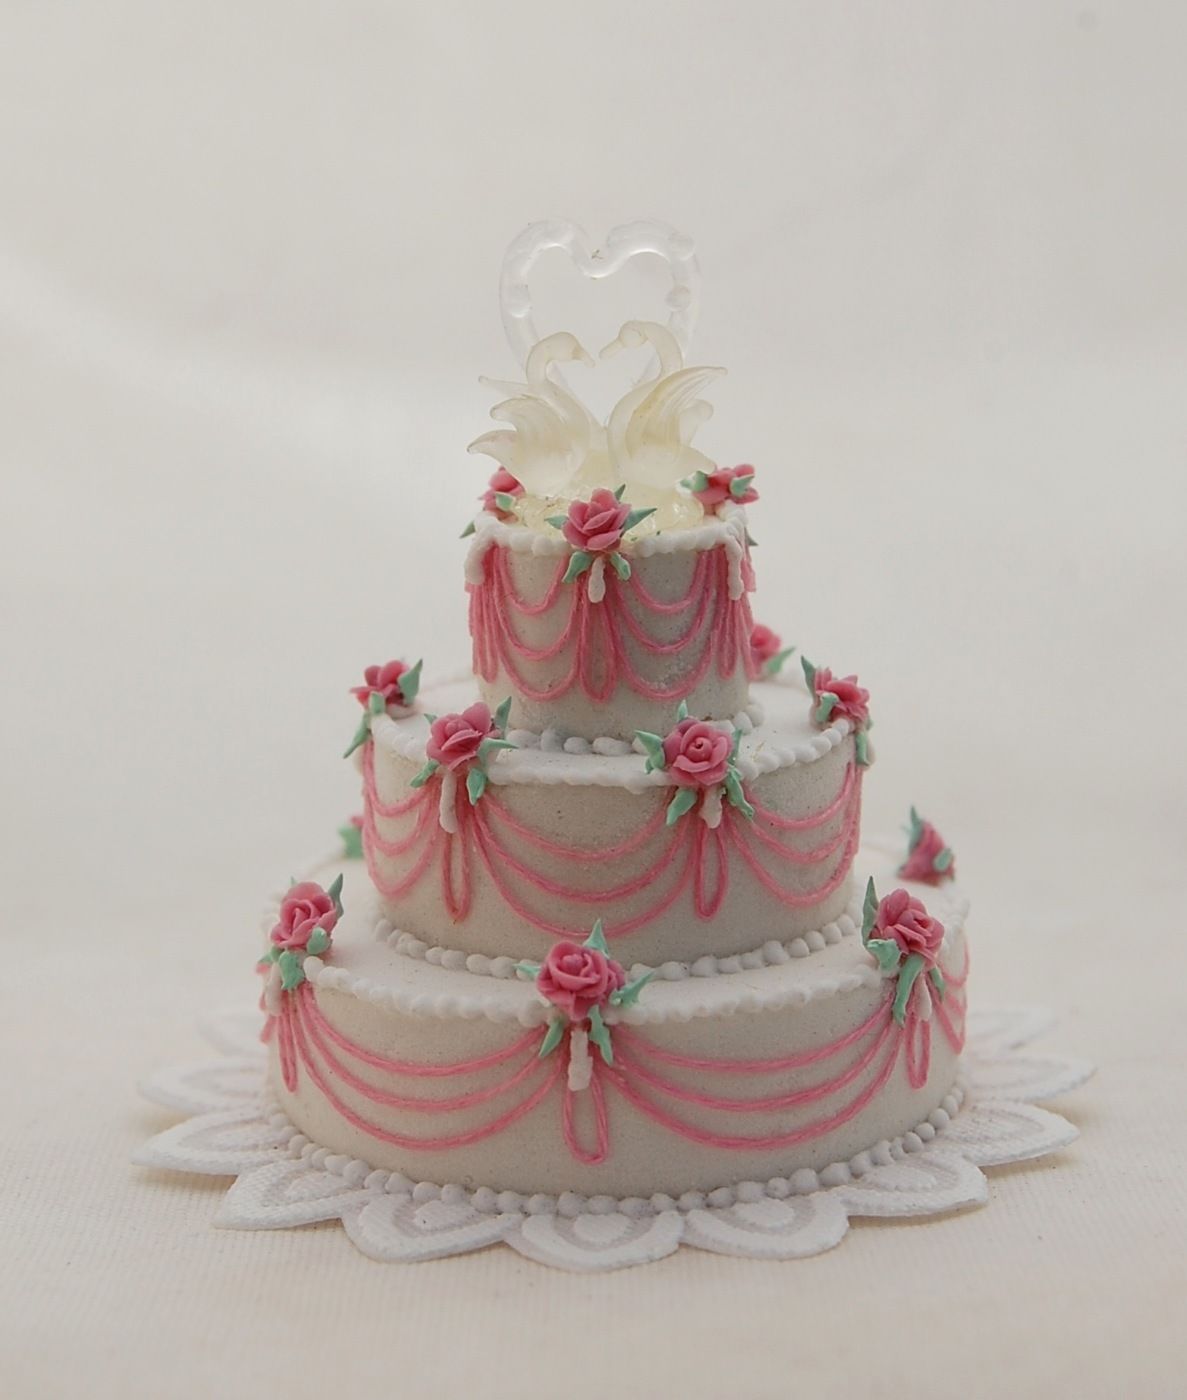 Artisan made spectacular 1/12 scale wedding cake miniature cakes